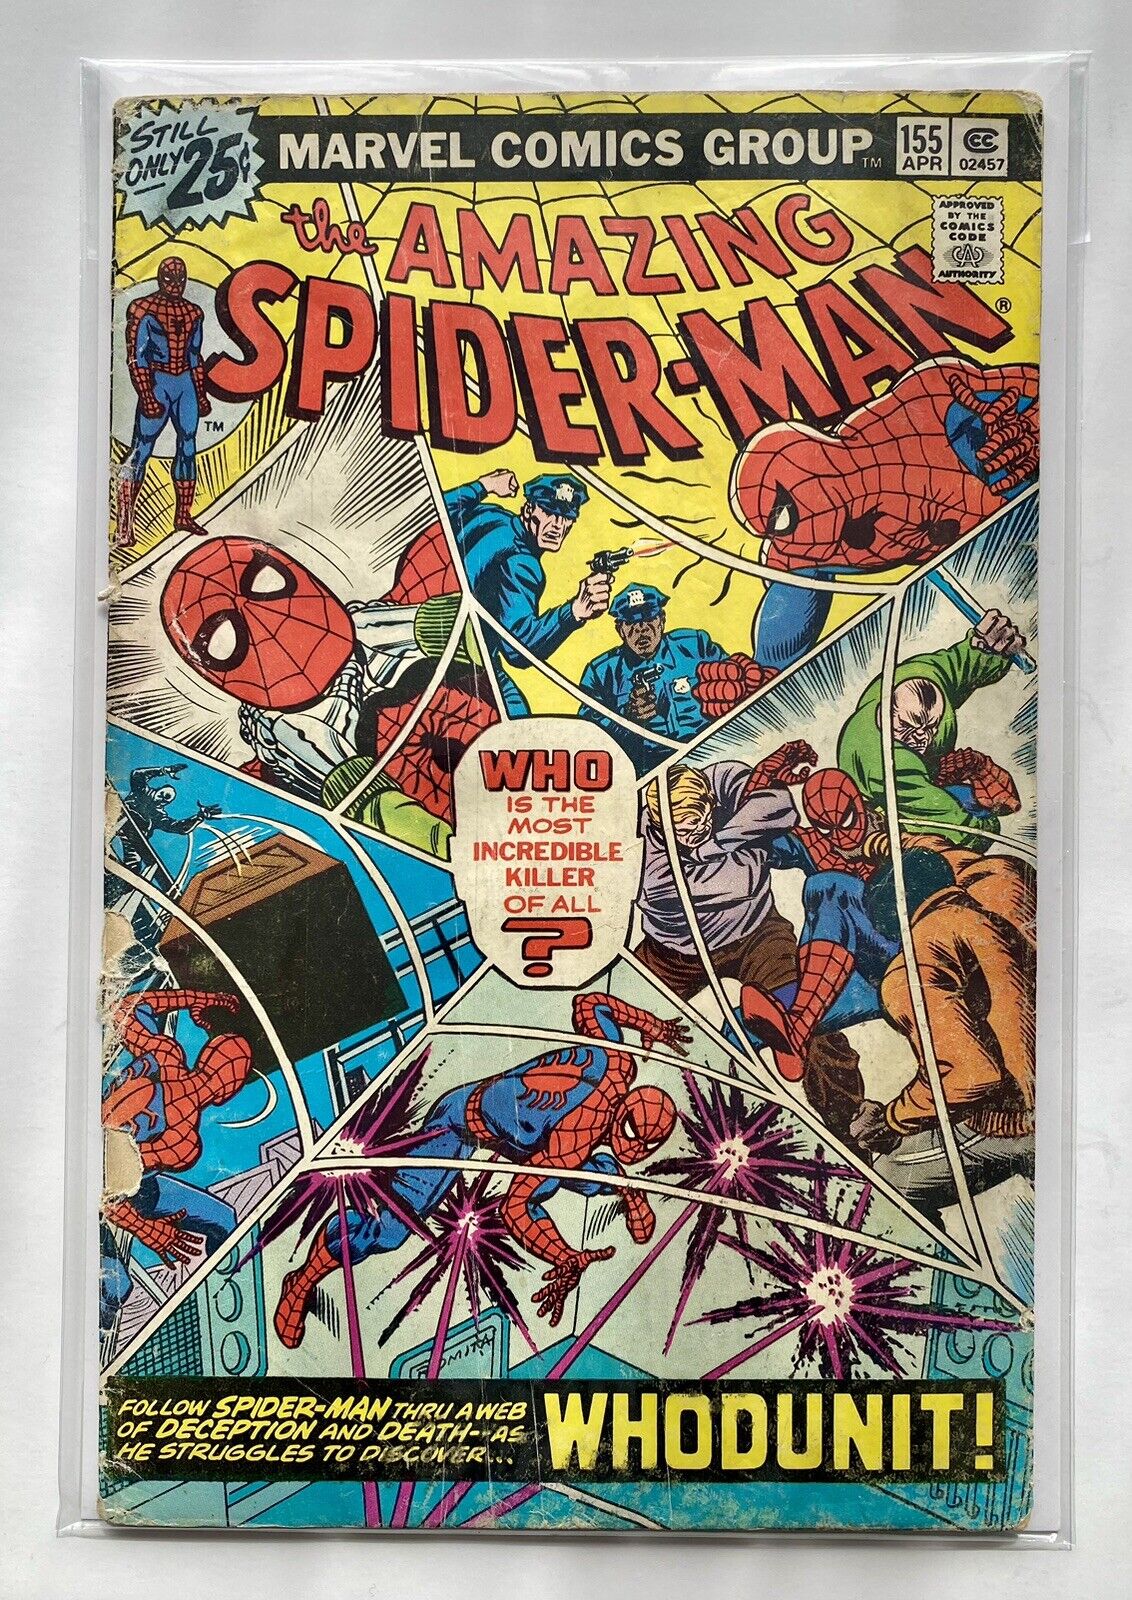 The Amazing Spider-Man #155 "Whodunit!" Marvel Comics 1976